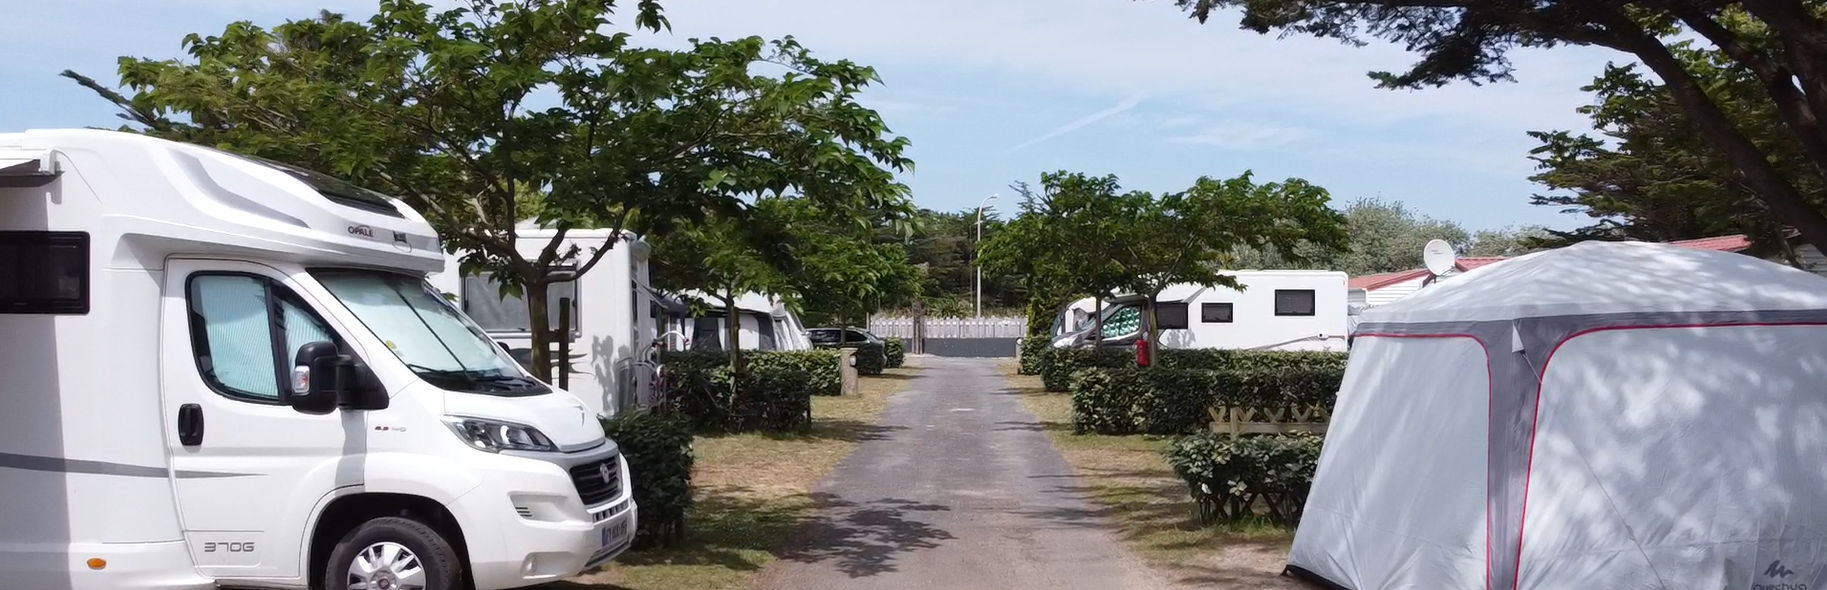 Camping Club Mahana : Allee Emplacements Camping Car Carvane Tente Emplacement Camping Mahana Bord De Mer Saint Hilaire De Riez